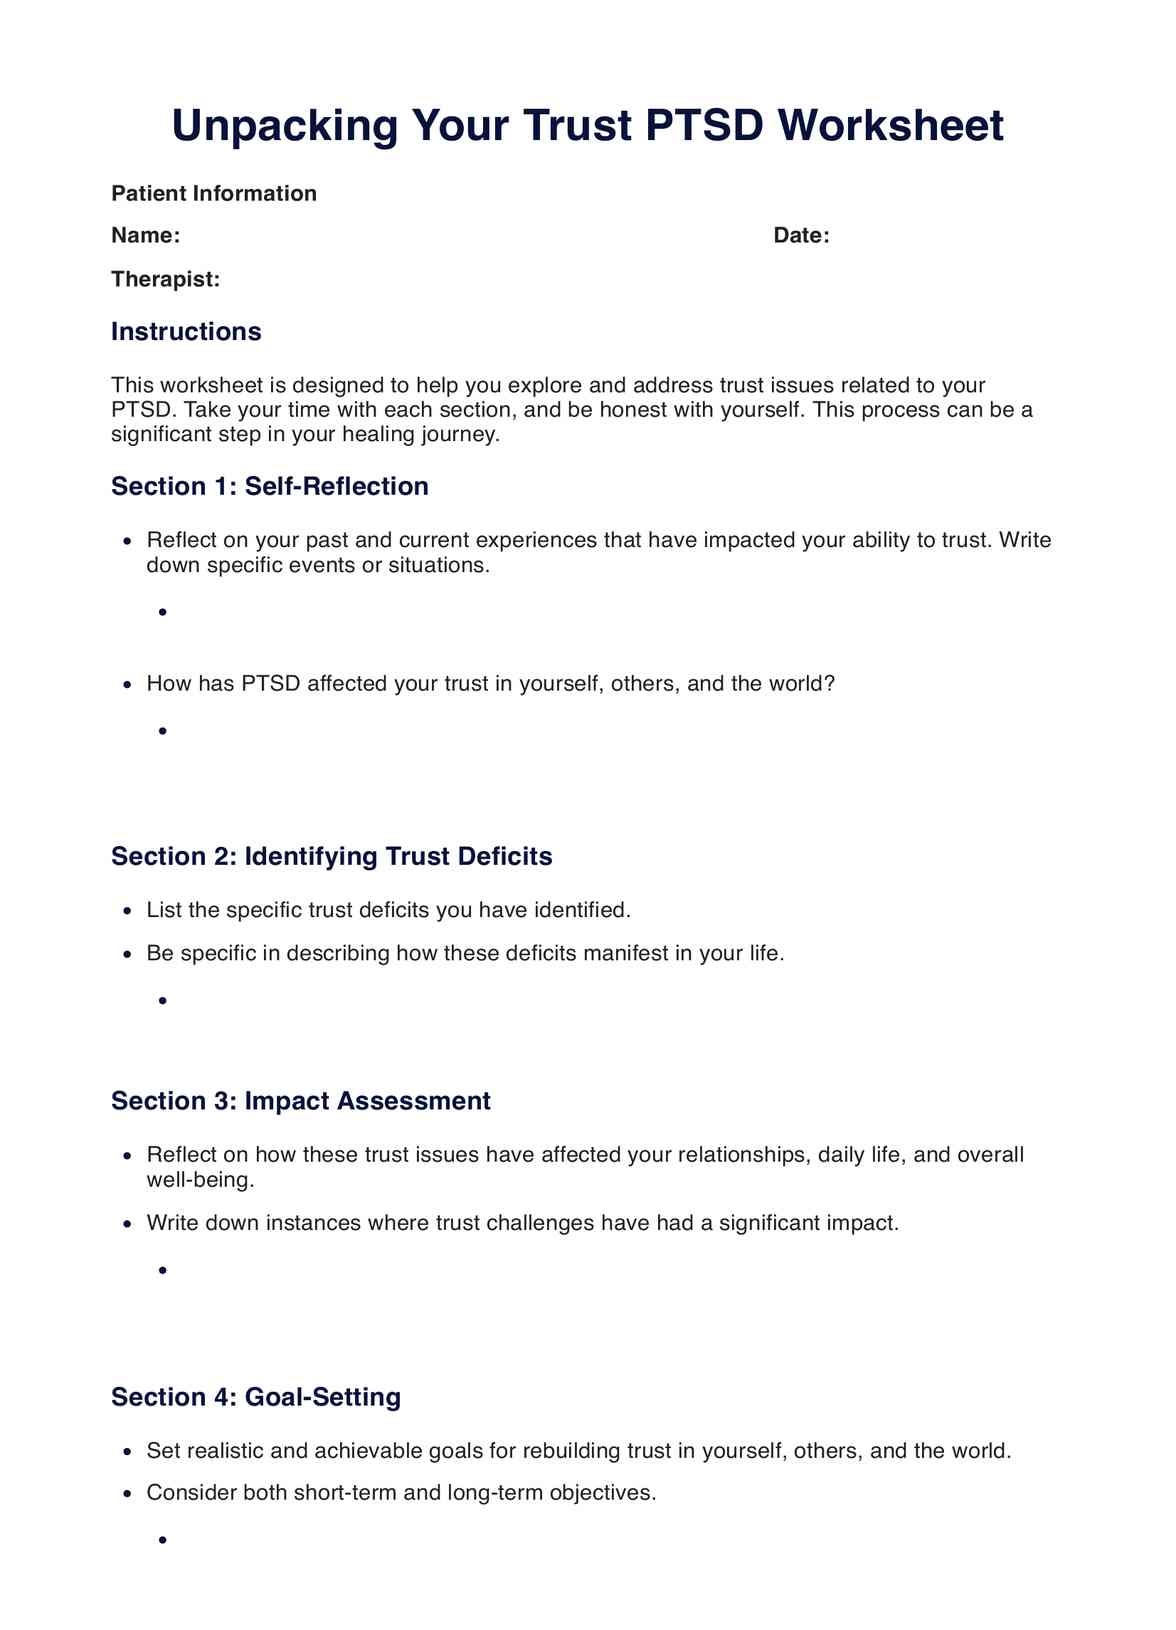 Unpacking Your Trust PTSD Worksheet PDF Example